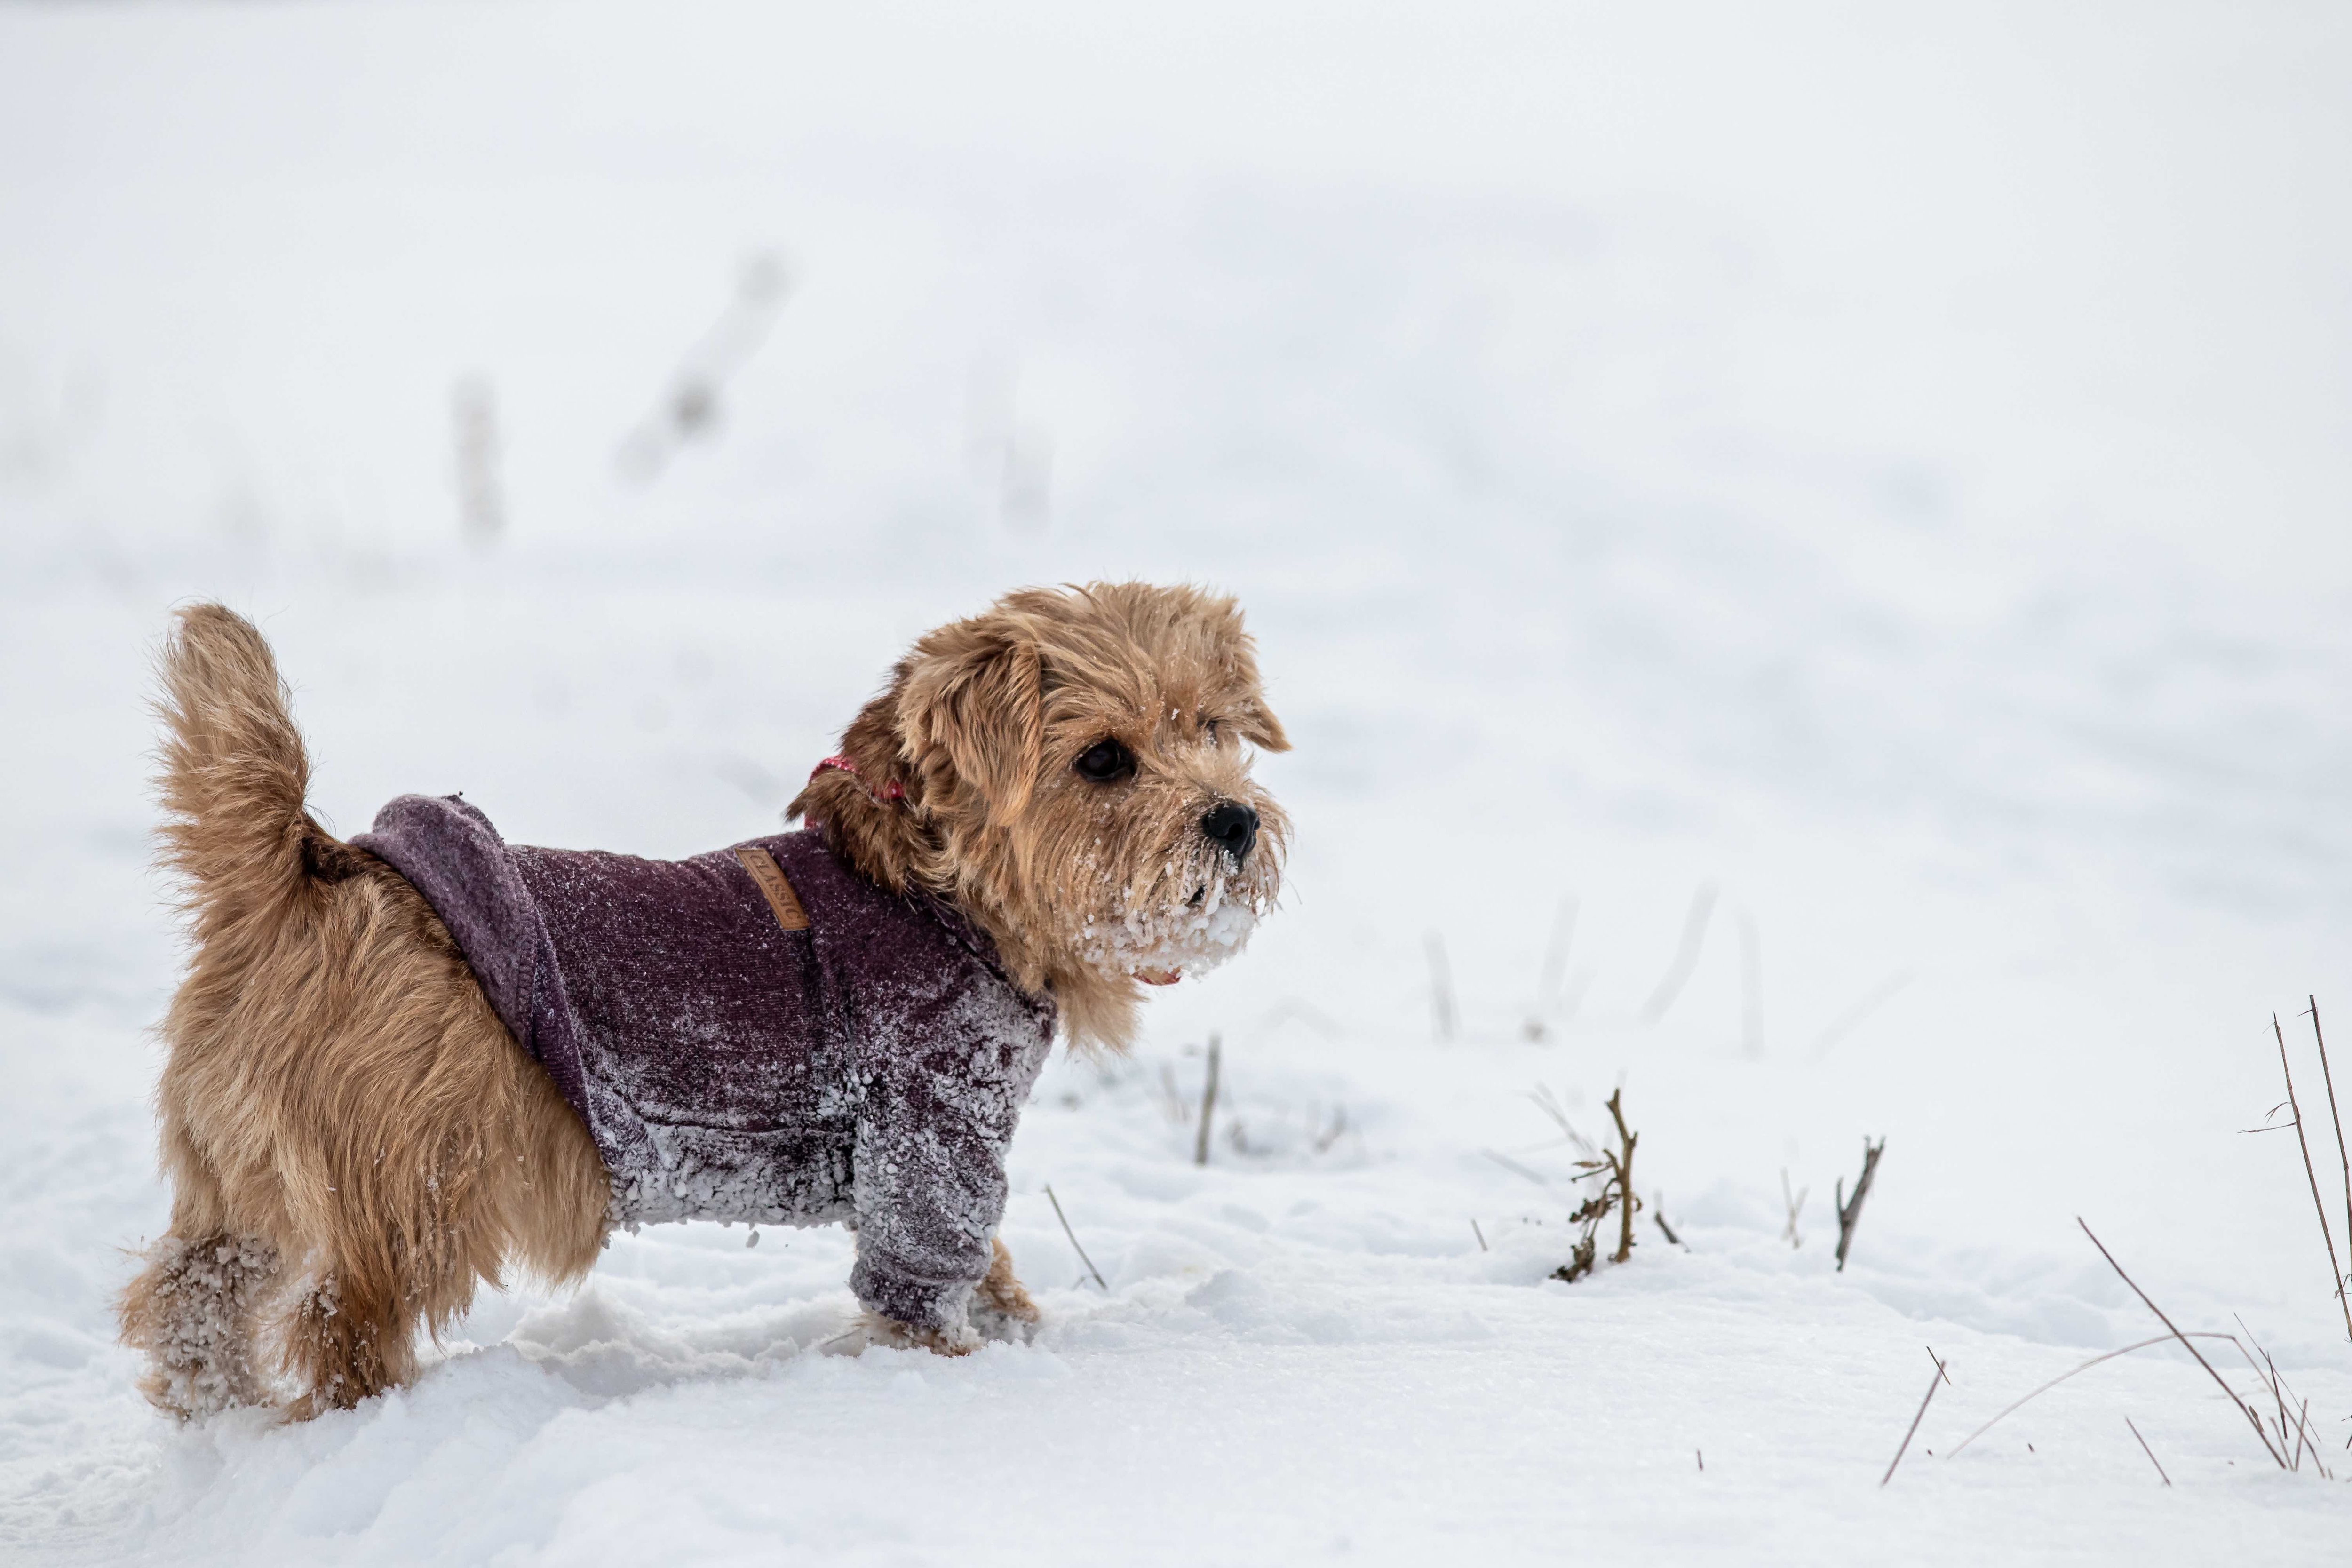 norfolk terrier in the snow wearing a jacket